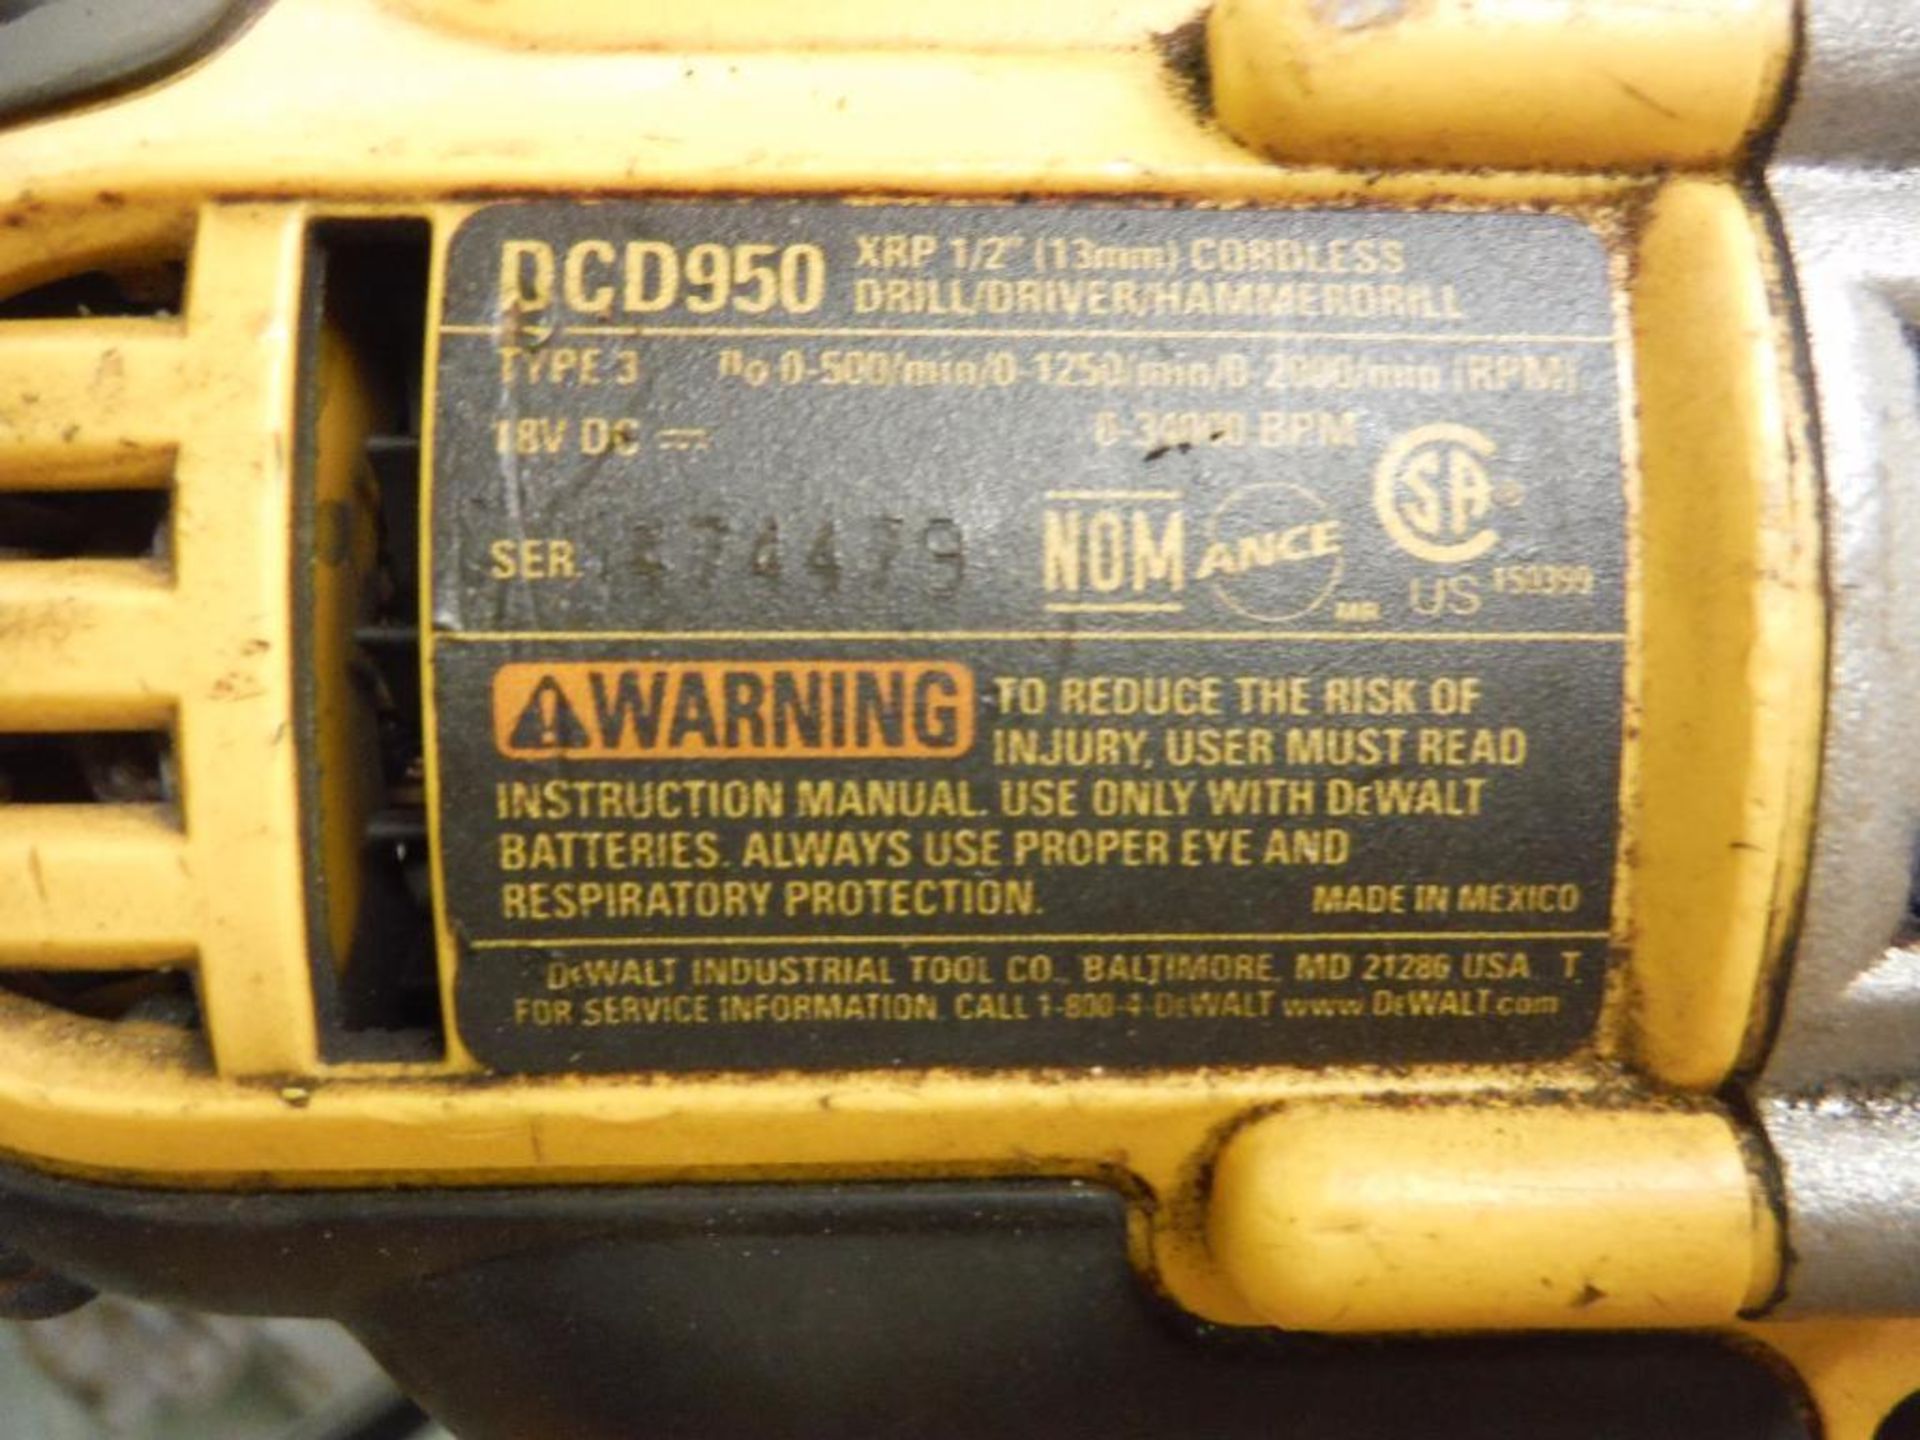 Dewalt 18 volt xrp cordless drill, battery charger, case ** Rigging Fee: $5 ** - Image 3 of 3